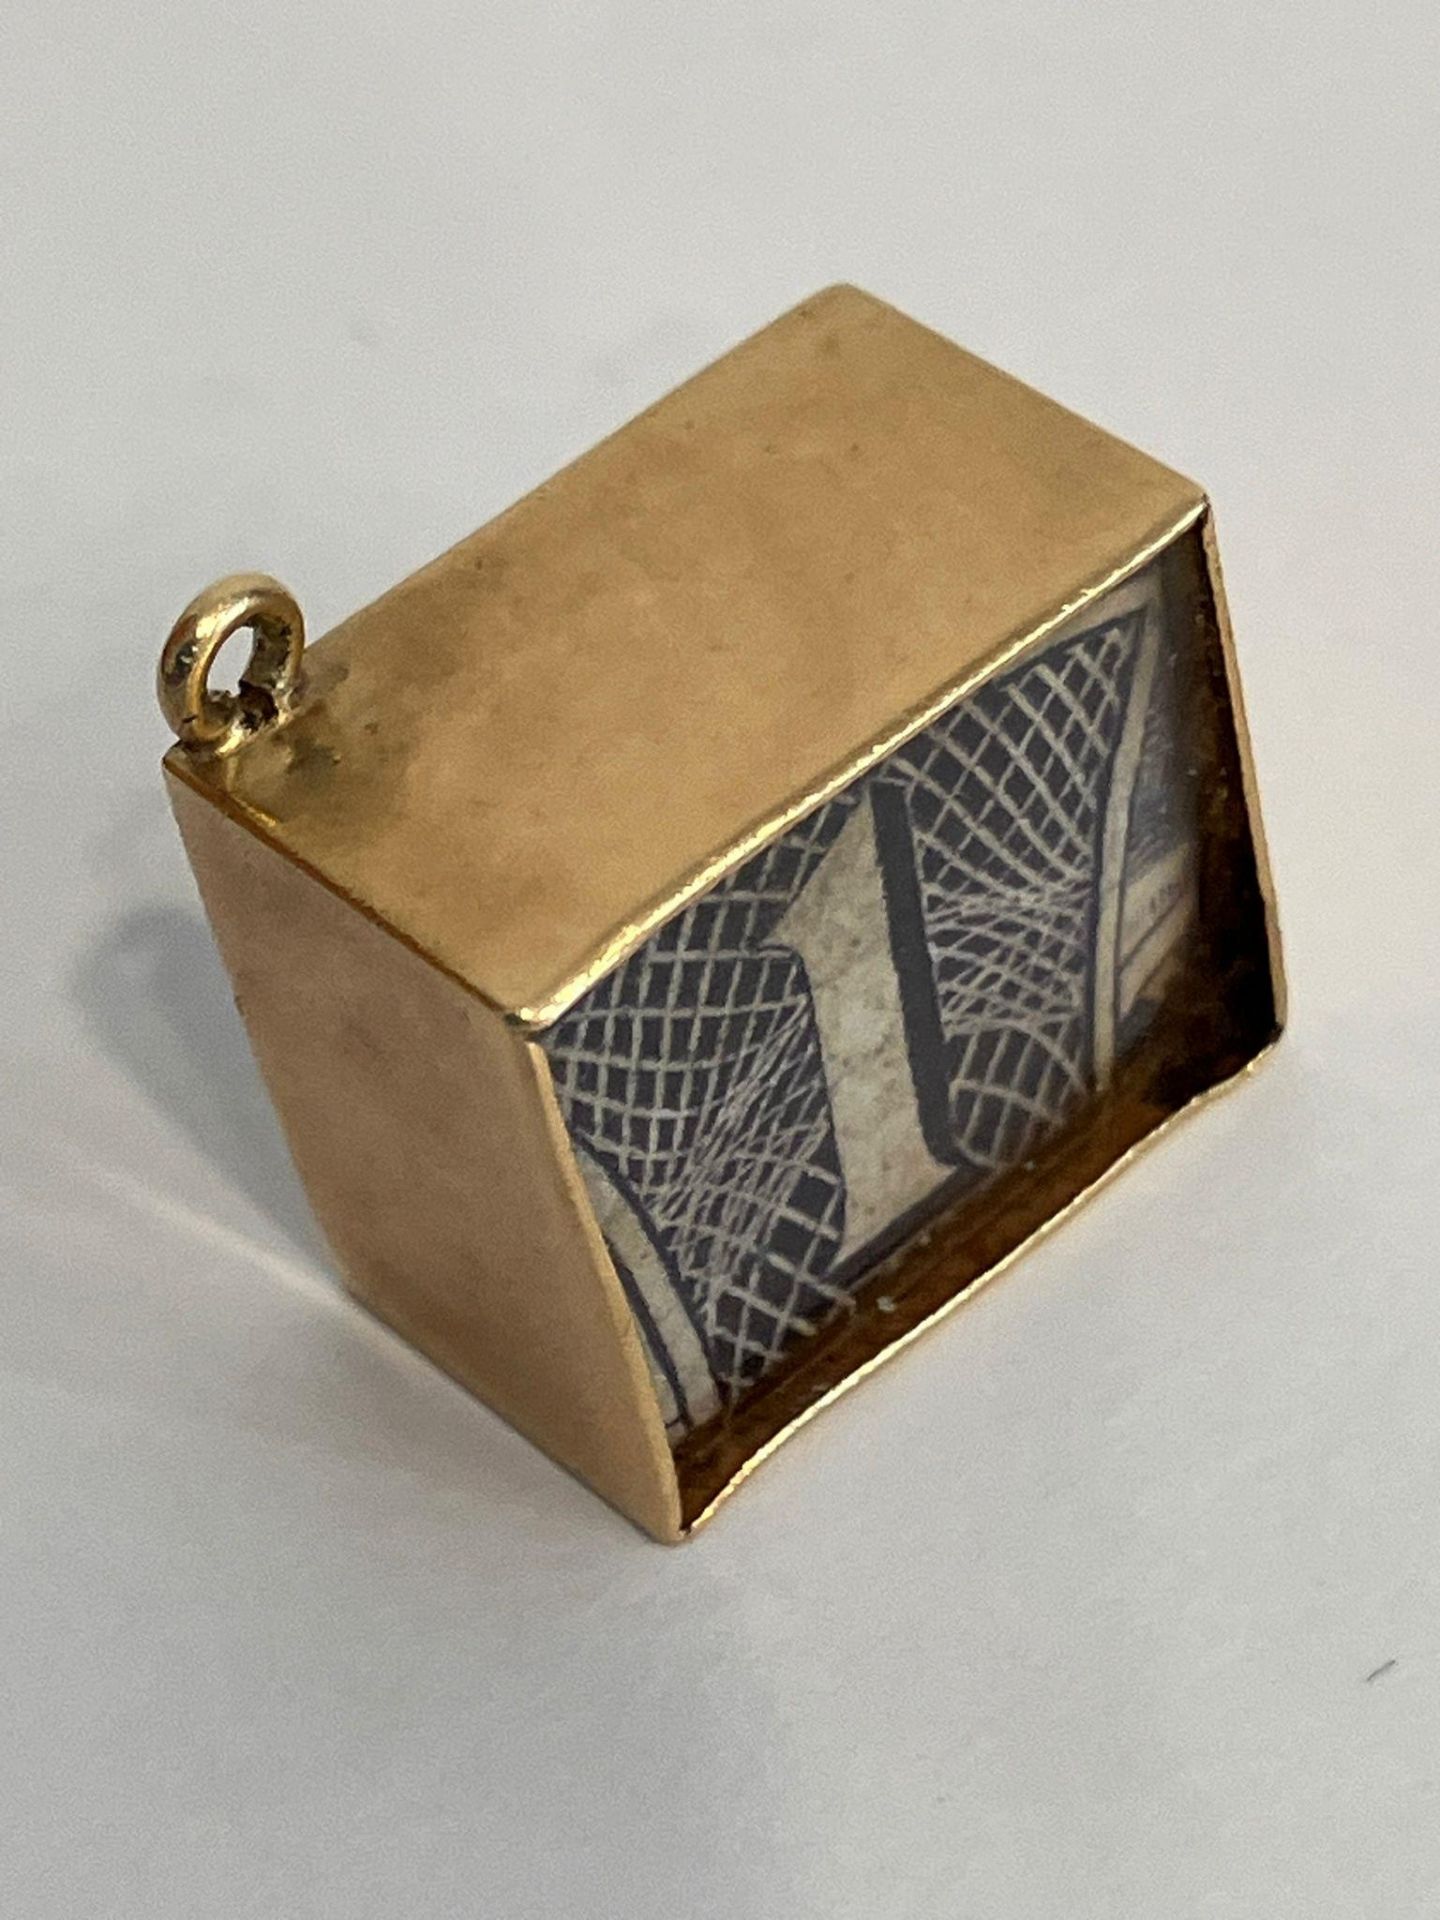 Vintage 9 carat GOLD CHARM with folded BLUE £1 NOTE inside a windowed 9 carat GOLD Case. Full UK - Image 8 of 9